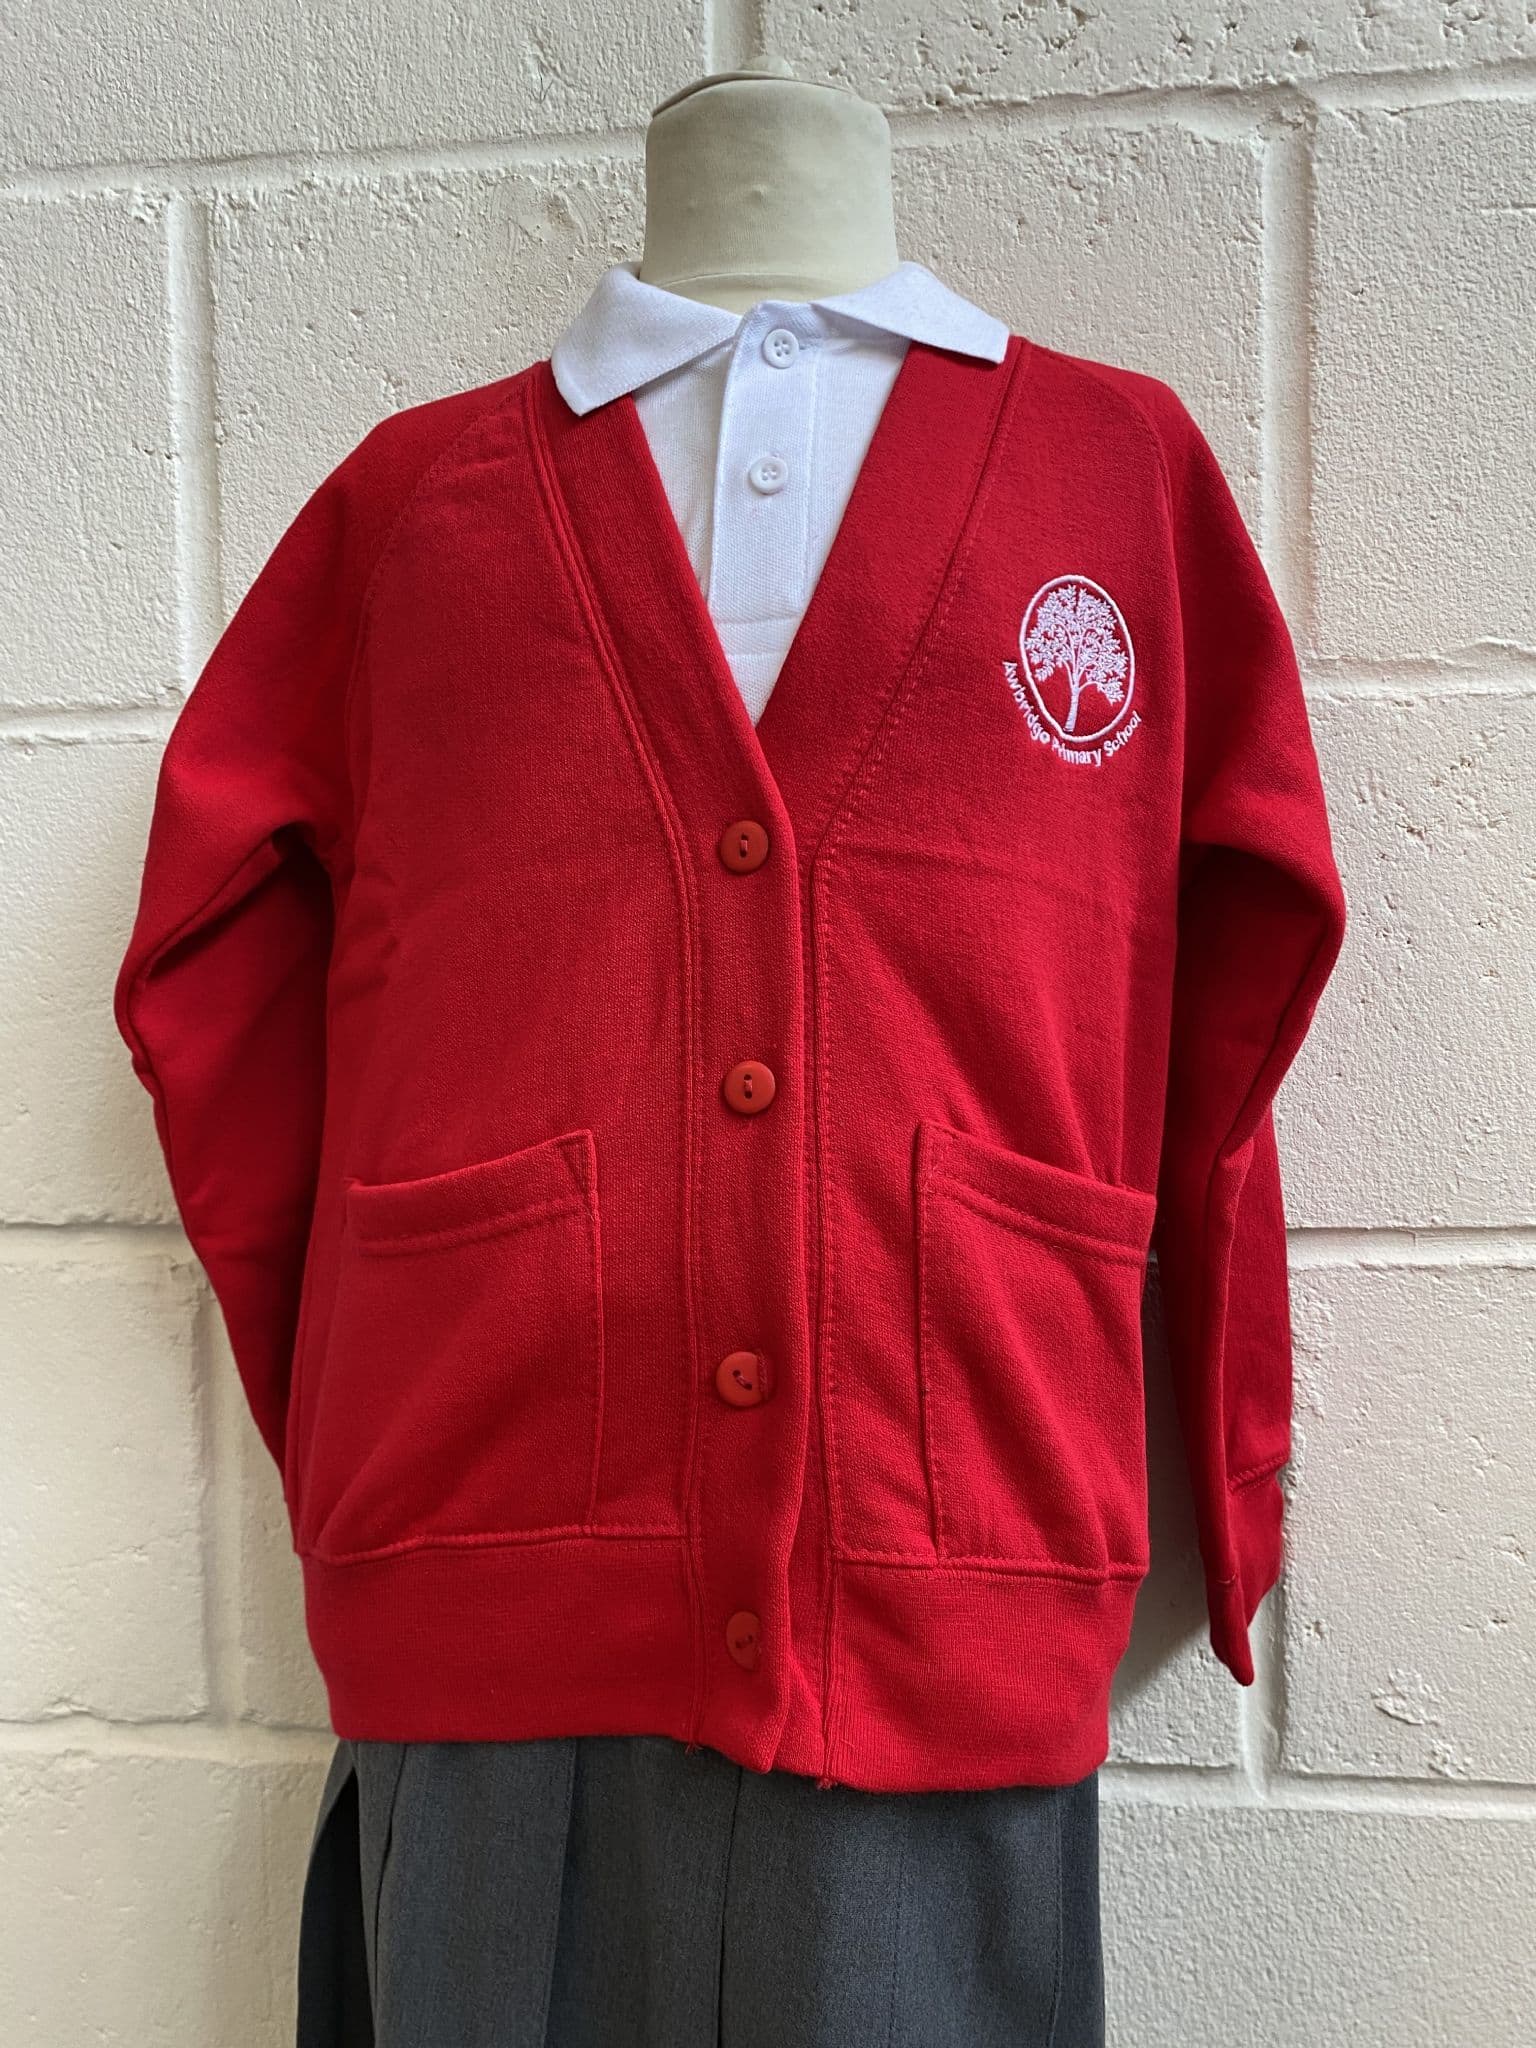 School Branded Jersey Cardigan - Size 26 Age 5-6 